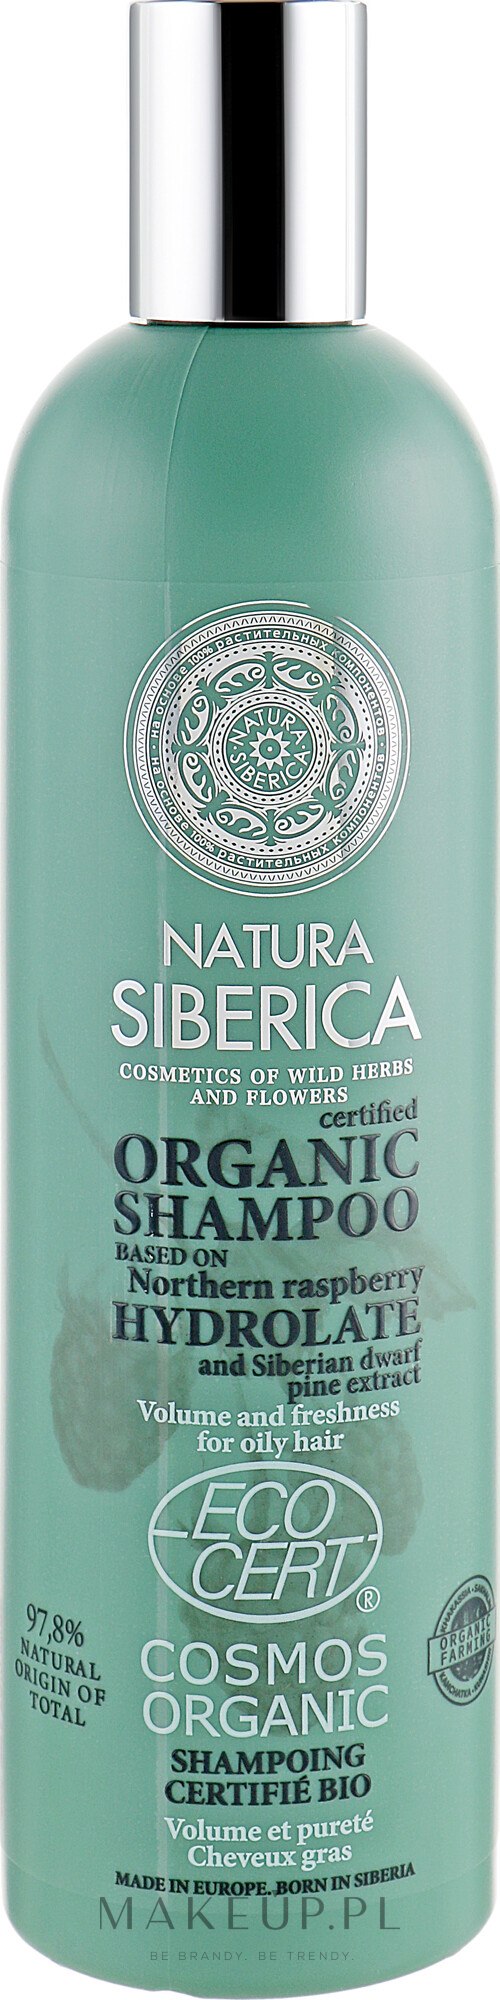 natura siberica szampon sklad